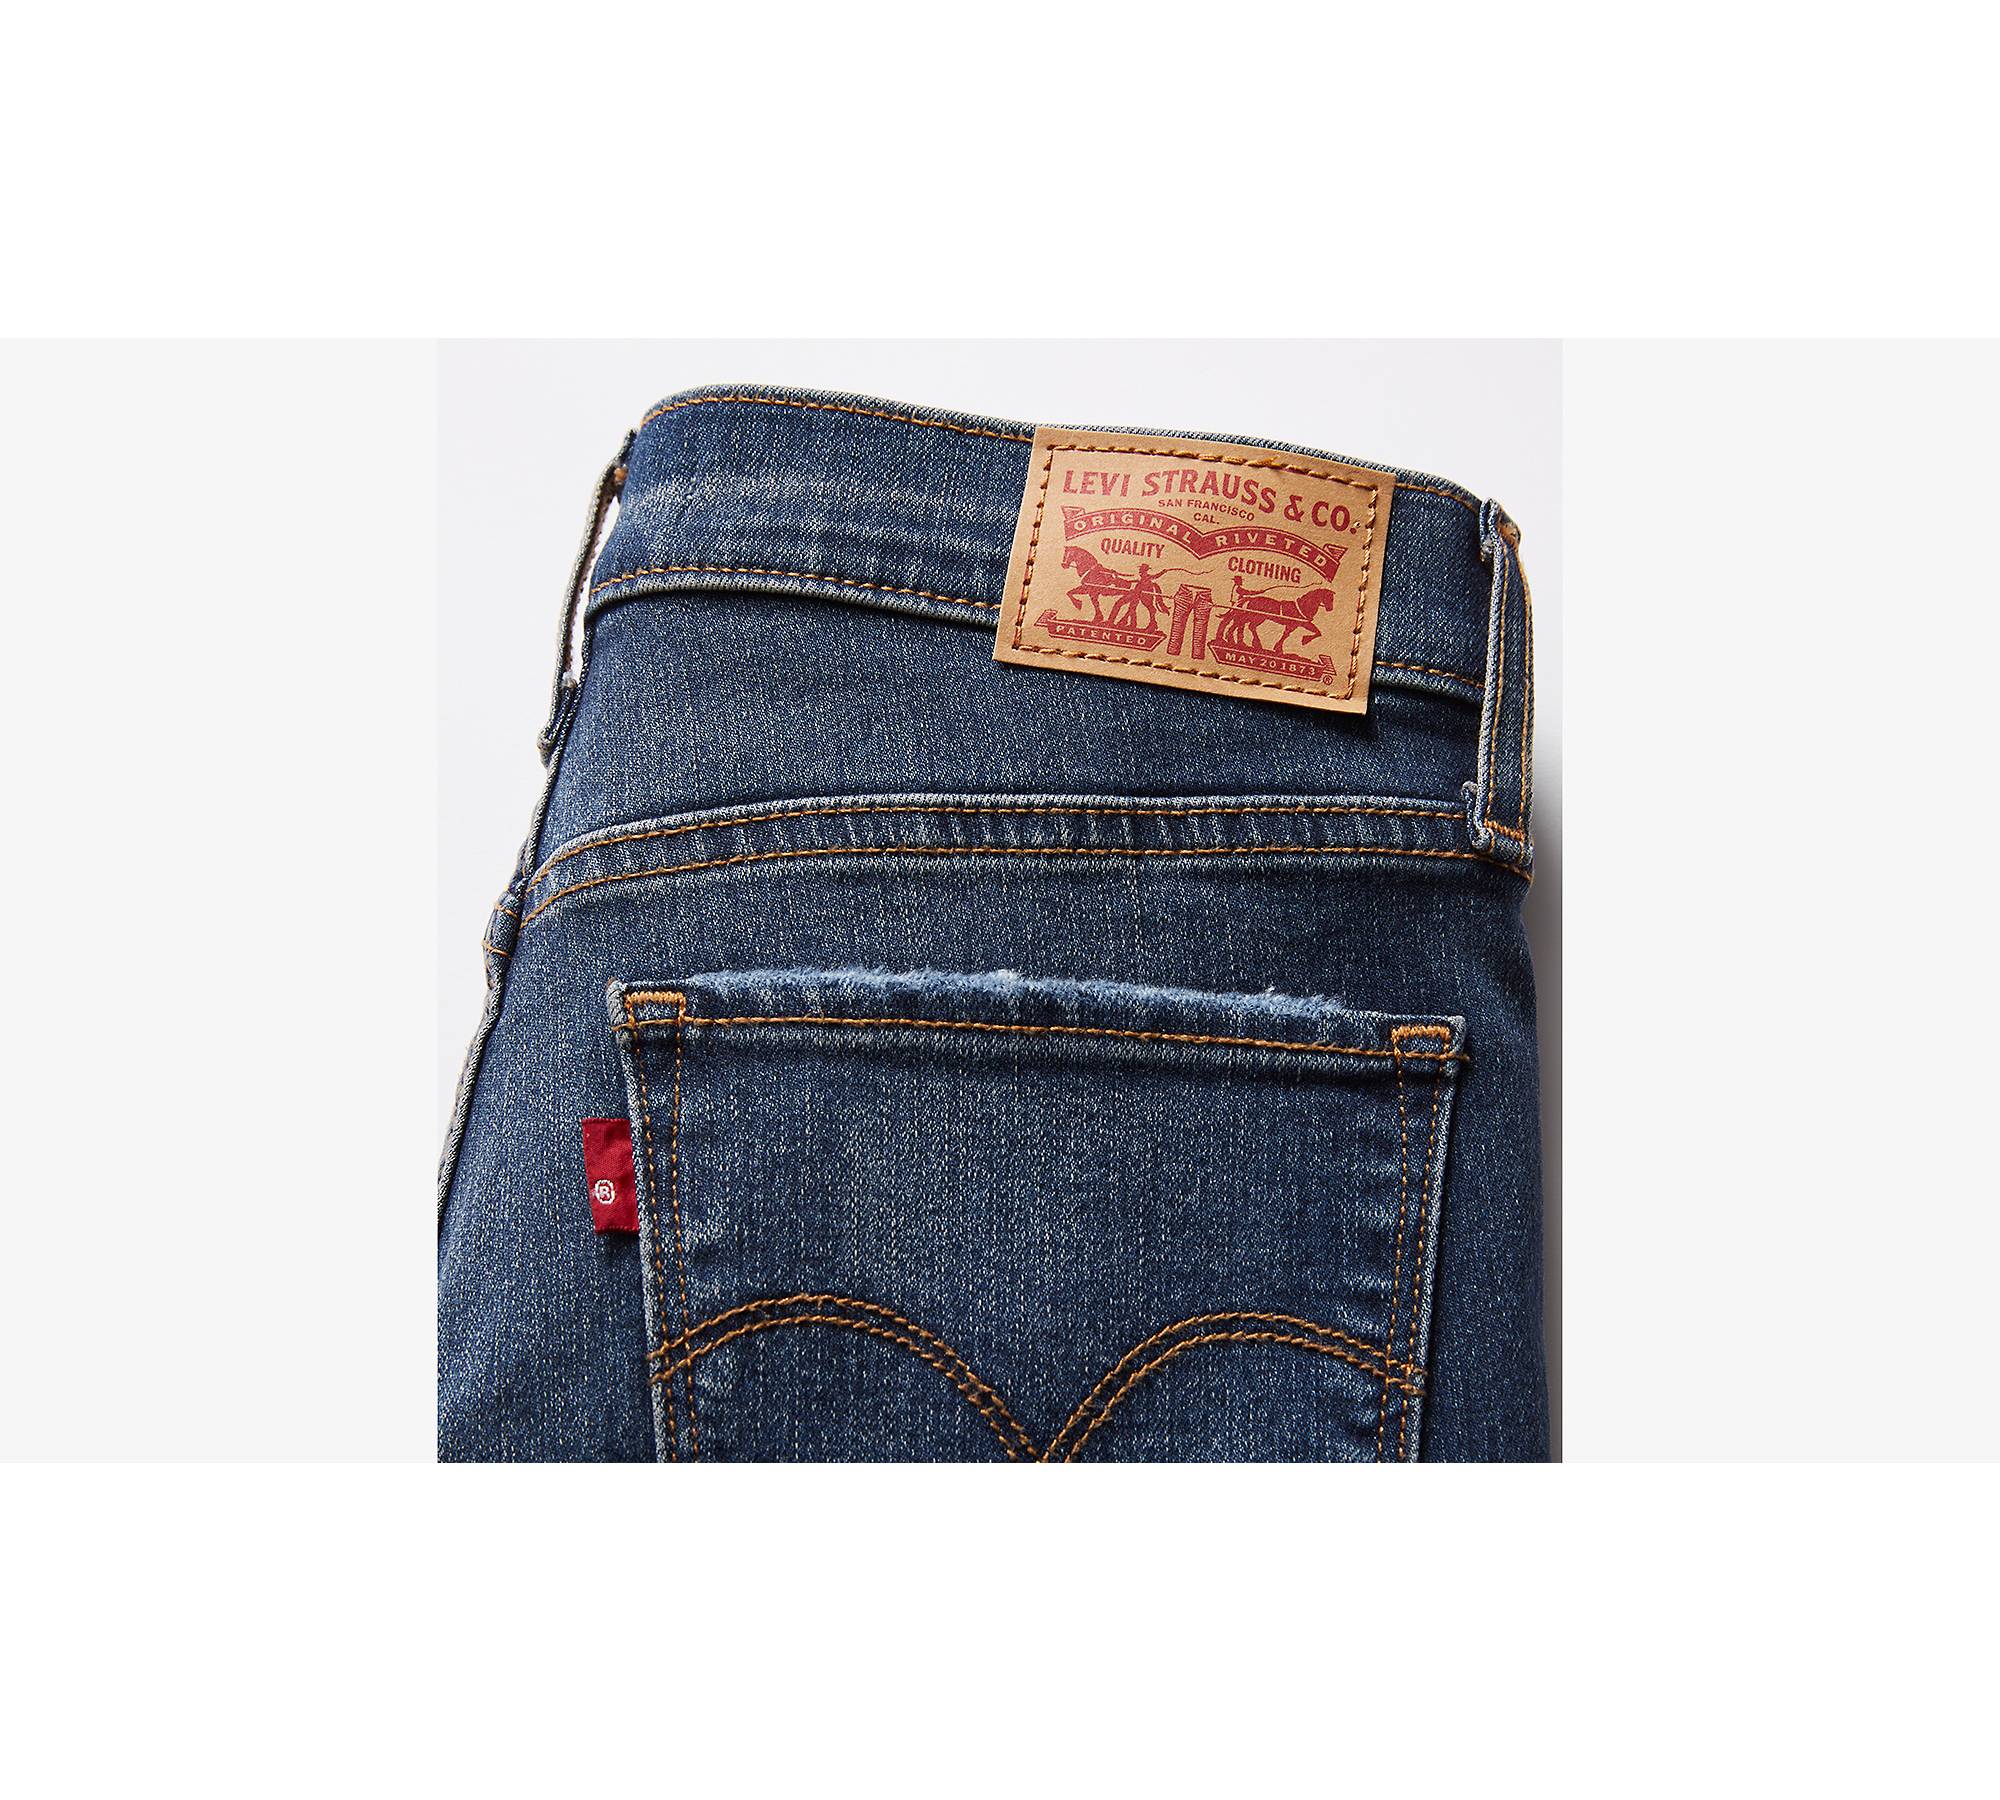 311 Shaping Skinny Capri Women's Jeans (plus Size) - Dark Wash